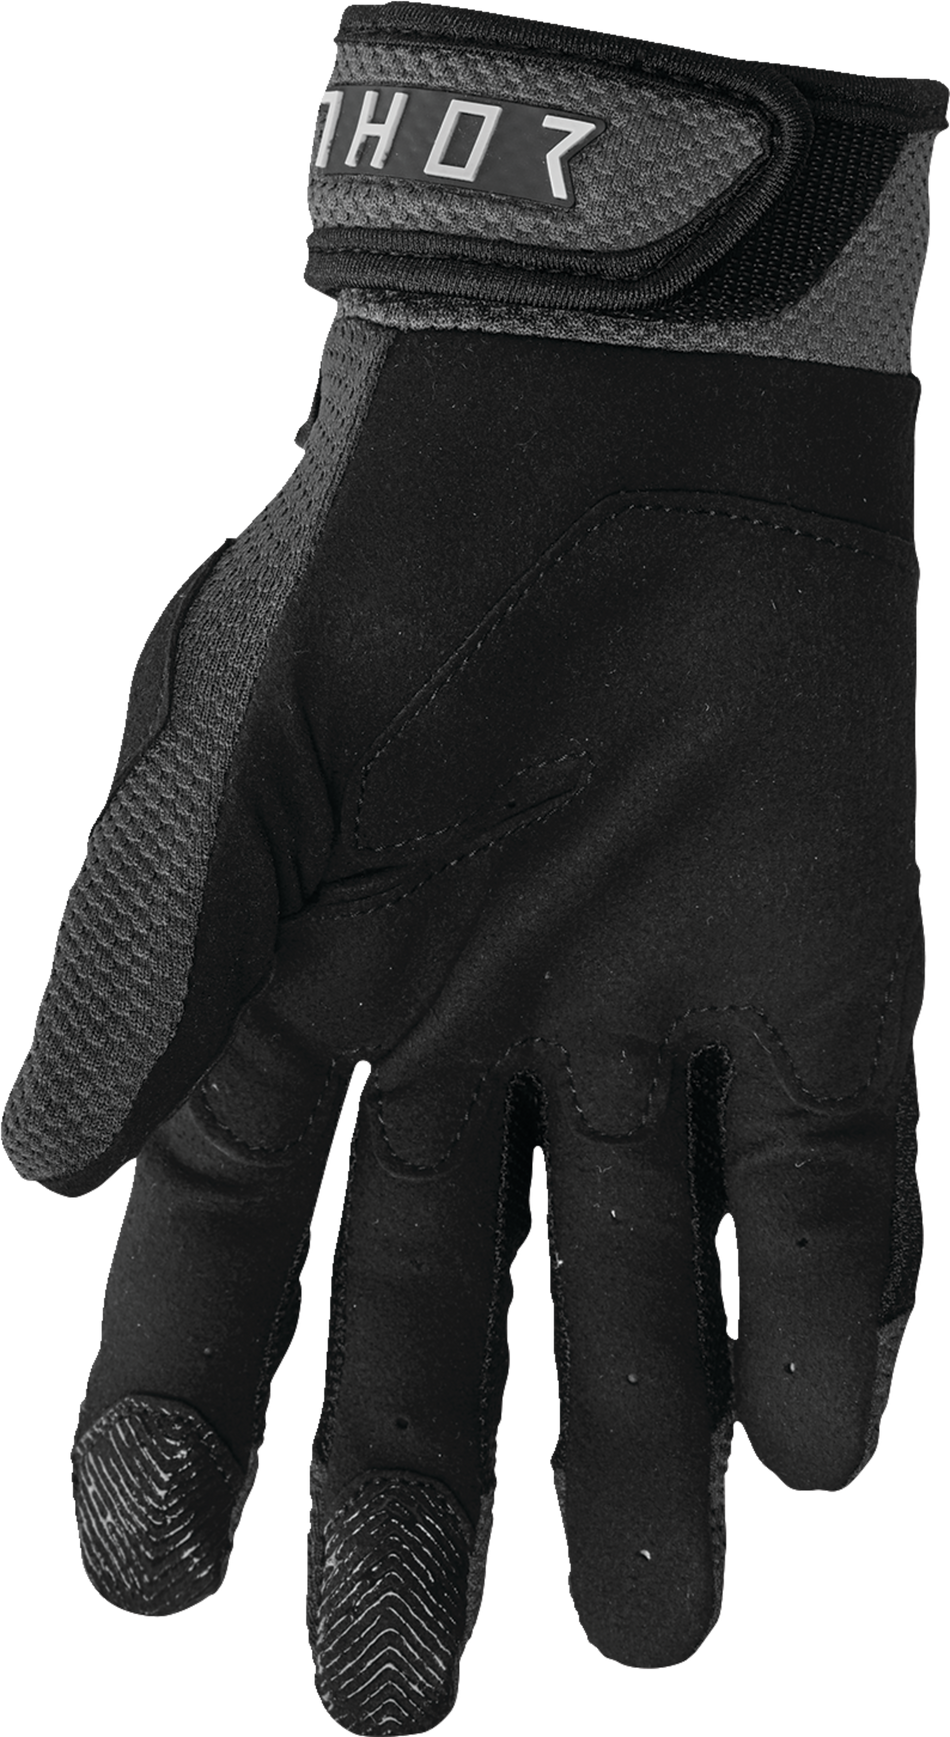 THOR Terrain Gloves - Black/Charcoal - XS 3330-7279